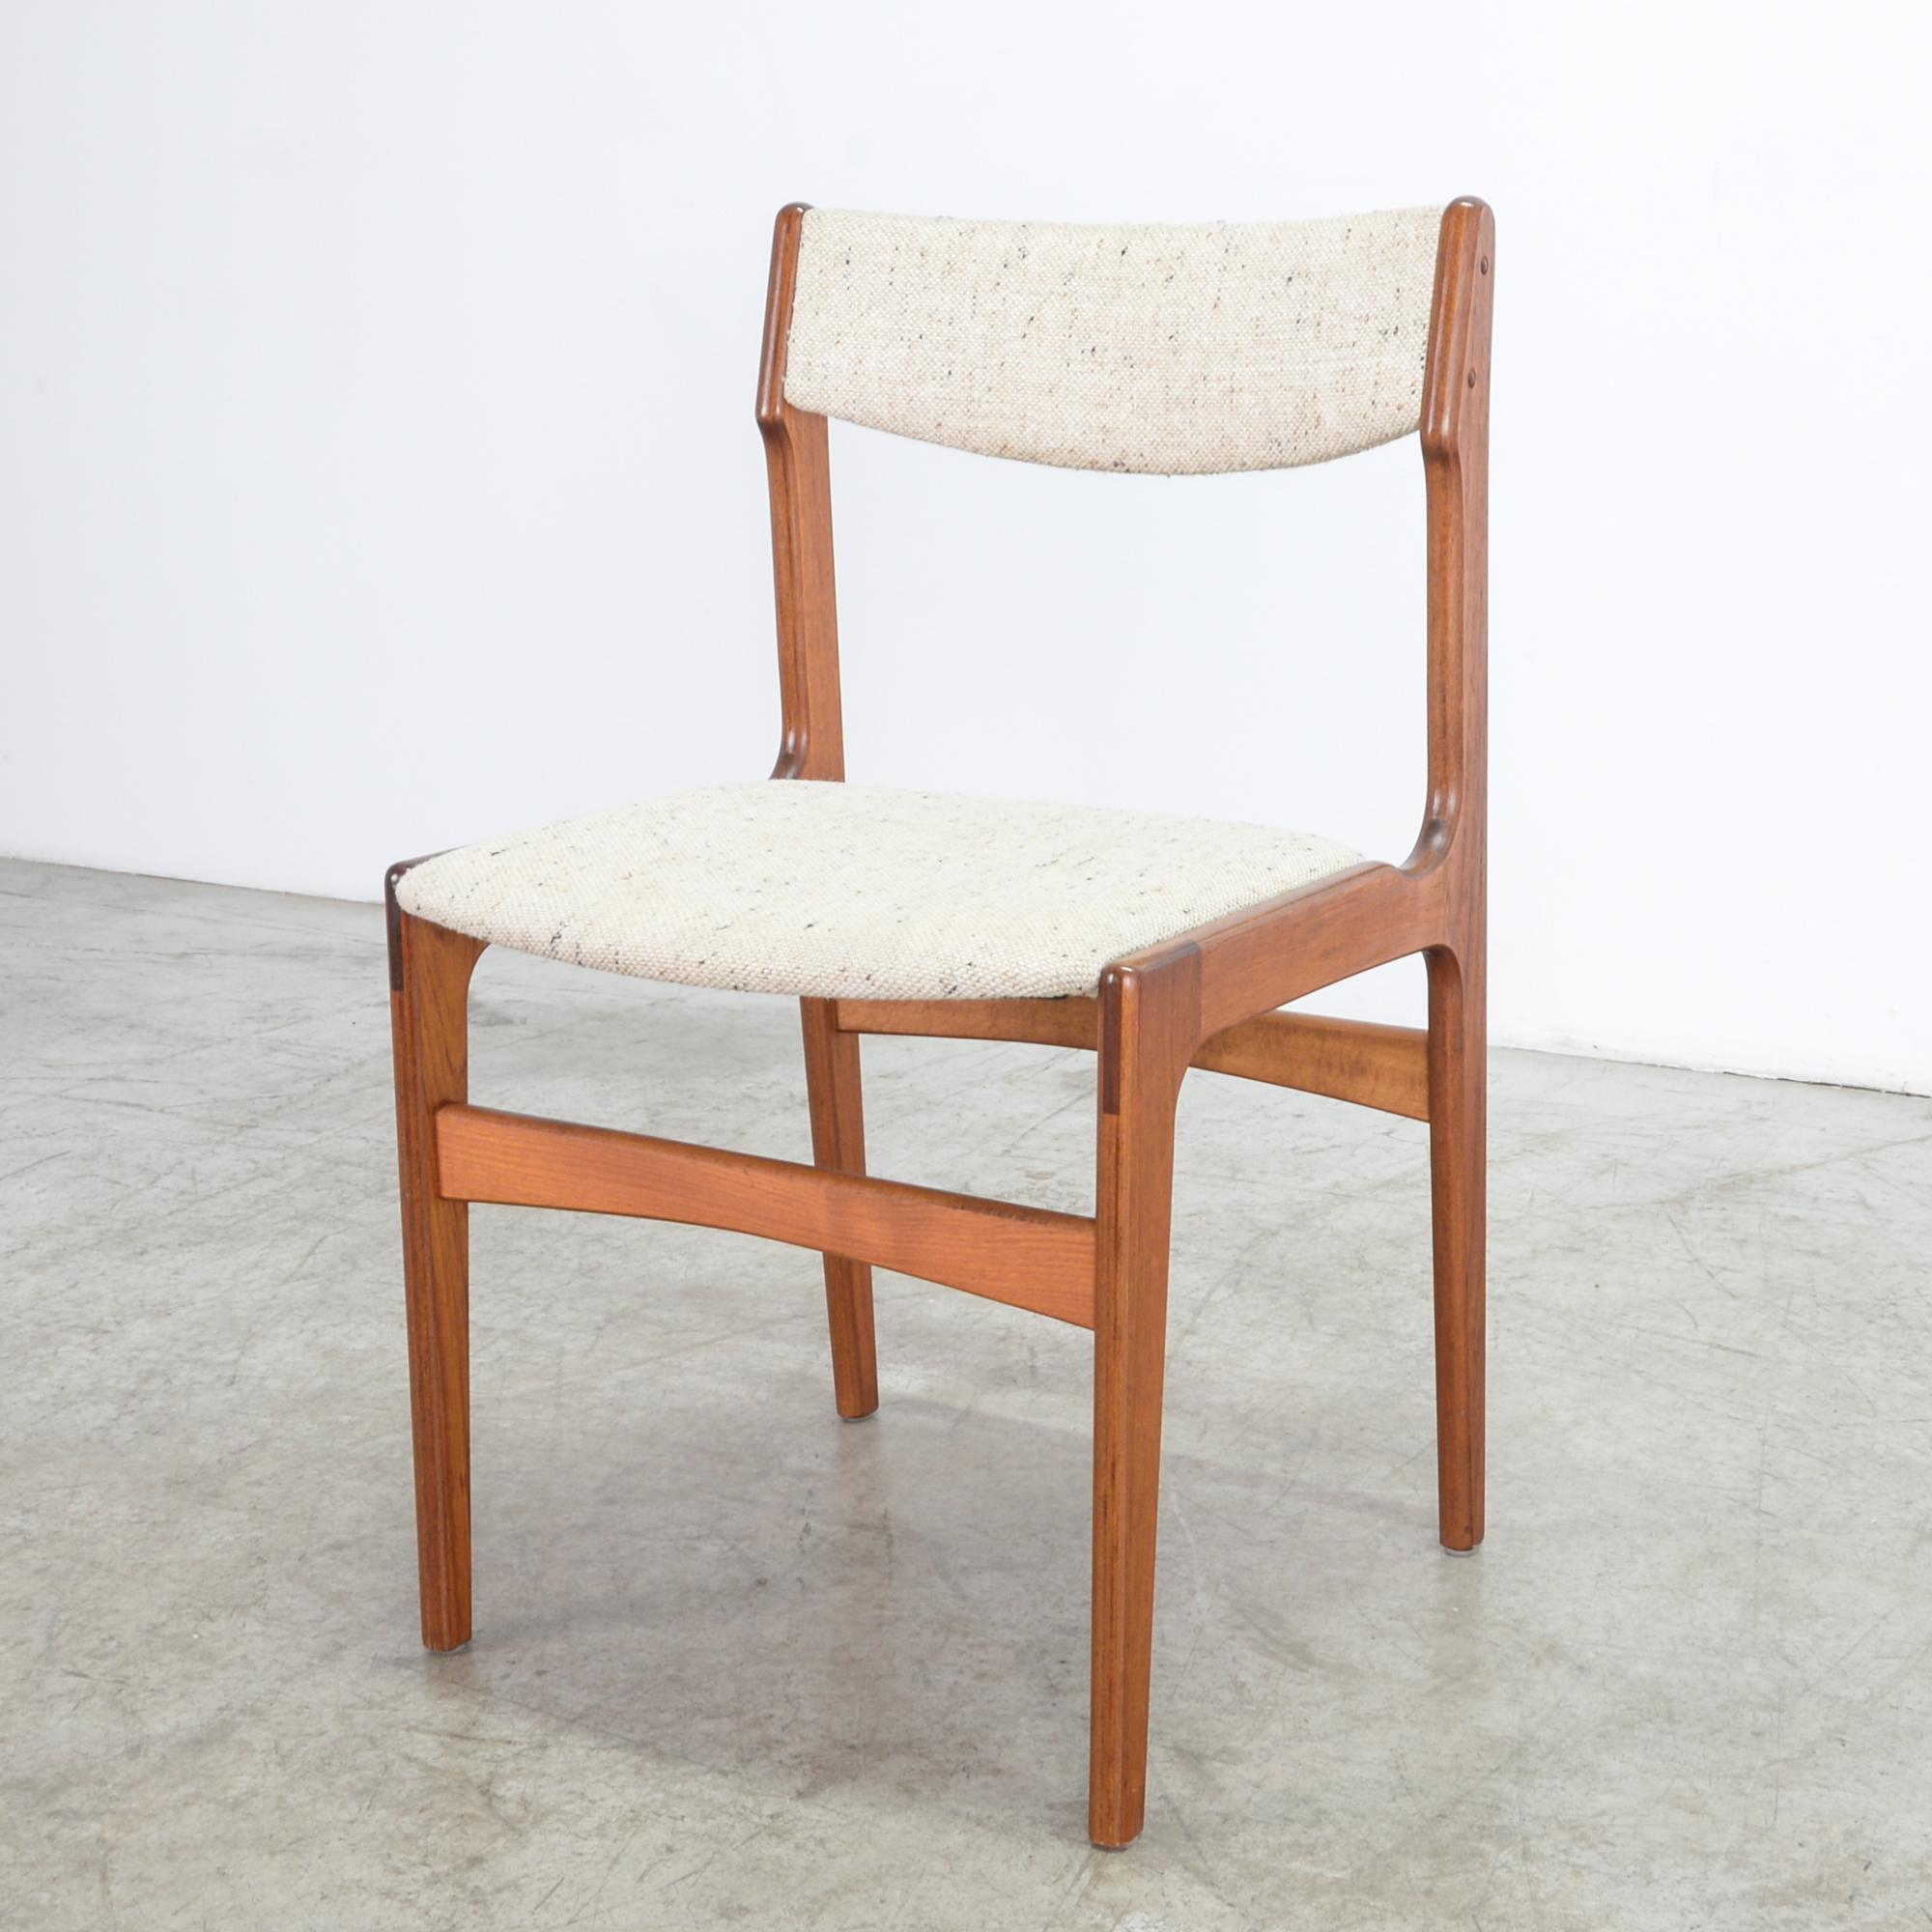 Mid-20th Century 1960s Danish Modern Upholstered Teak Dining Chair